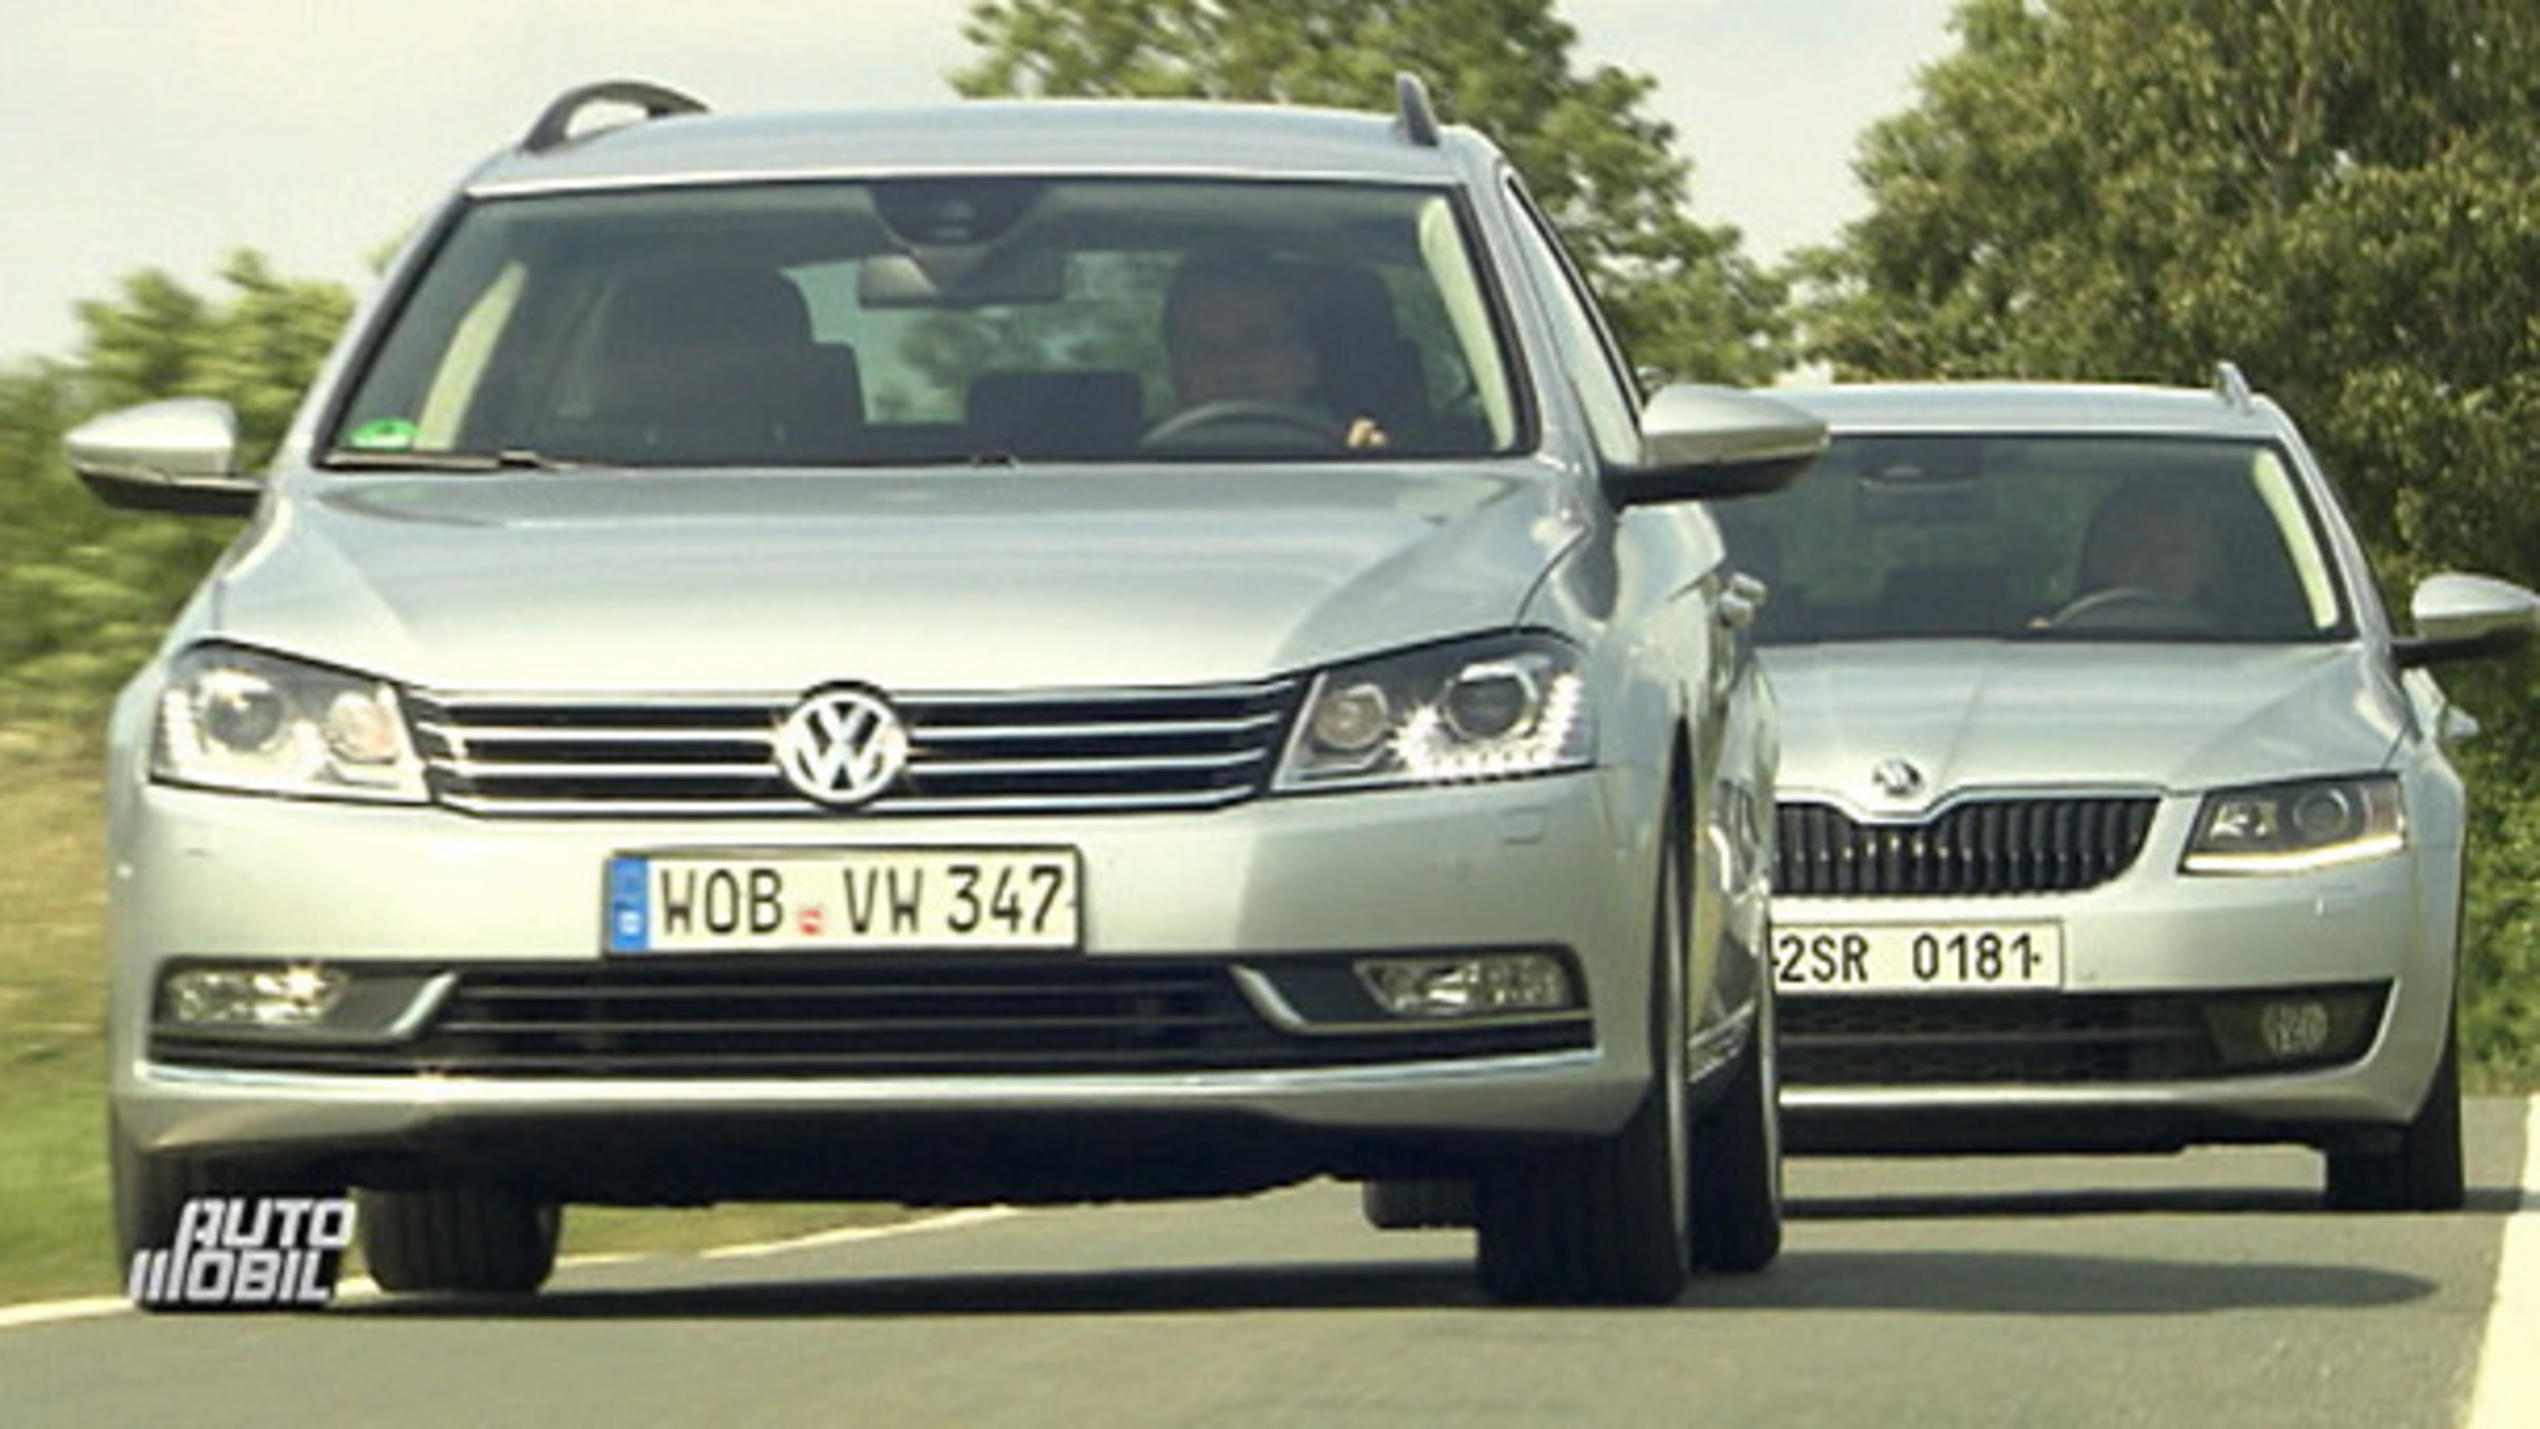 VW Passat Variant vs. Skoda Octavia Kombi